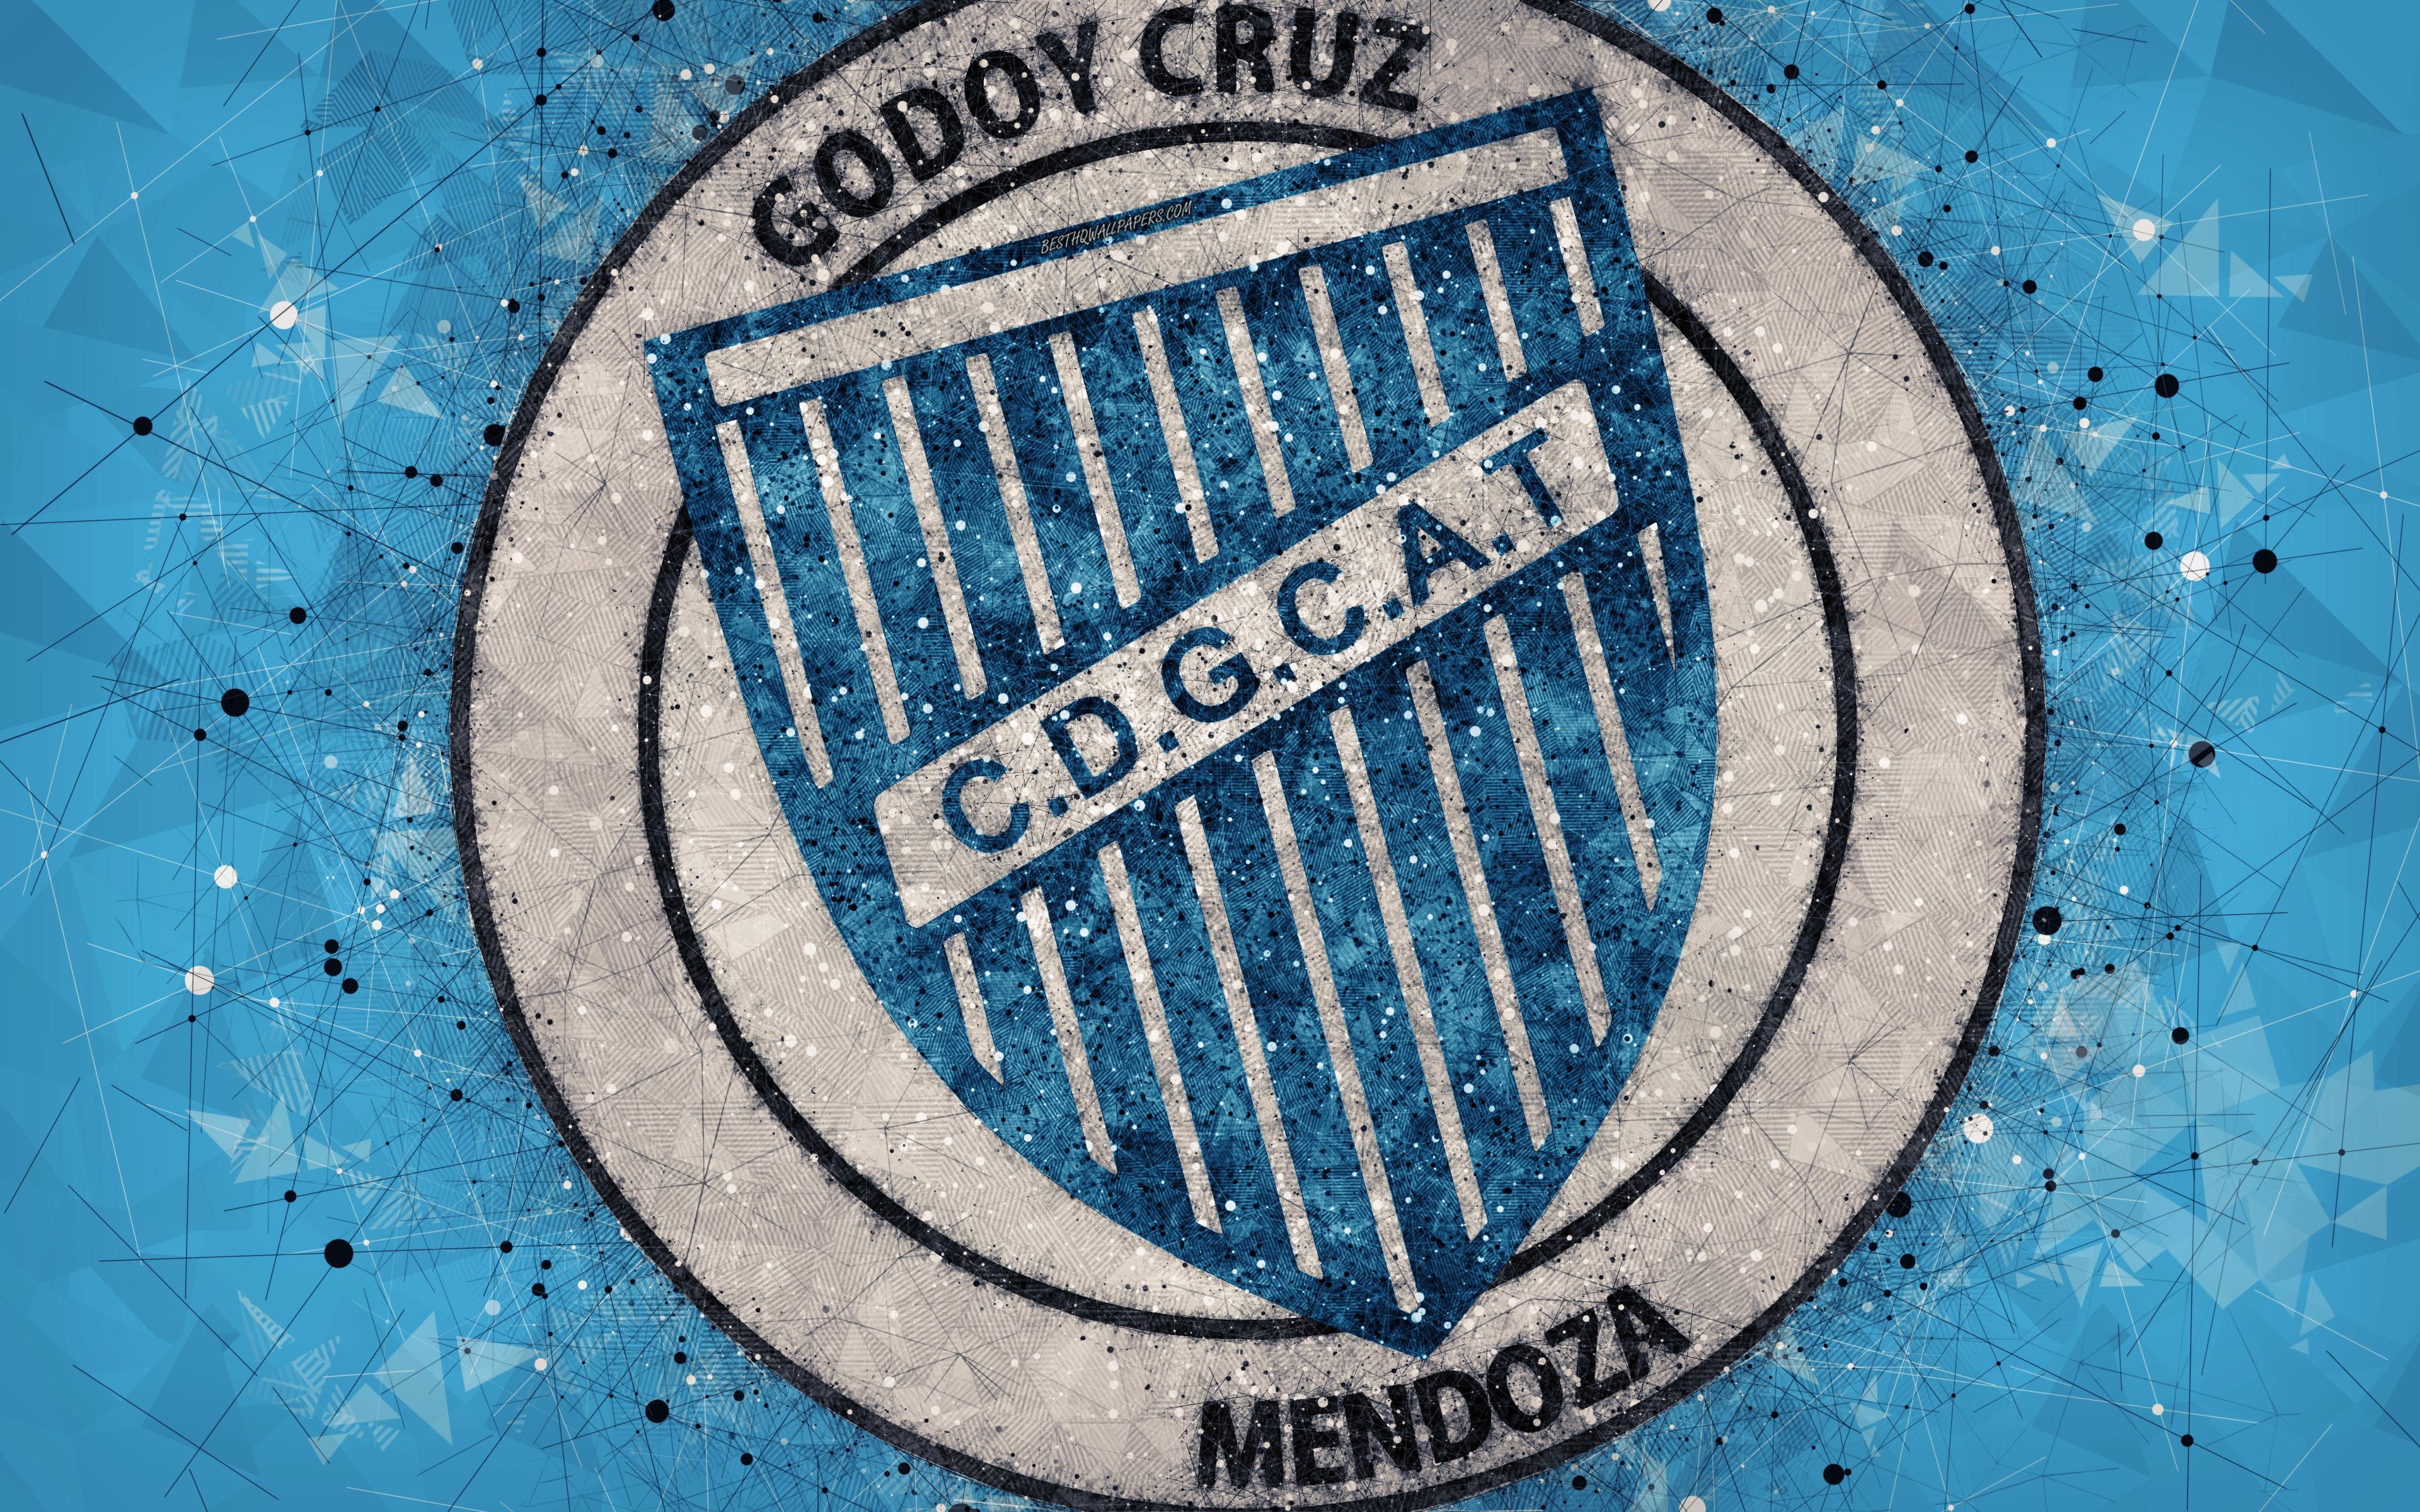 Download wallpaper Godoy Cruz Antonio Tomba, 4k, logo, geometric